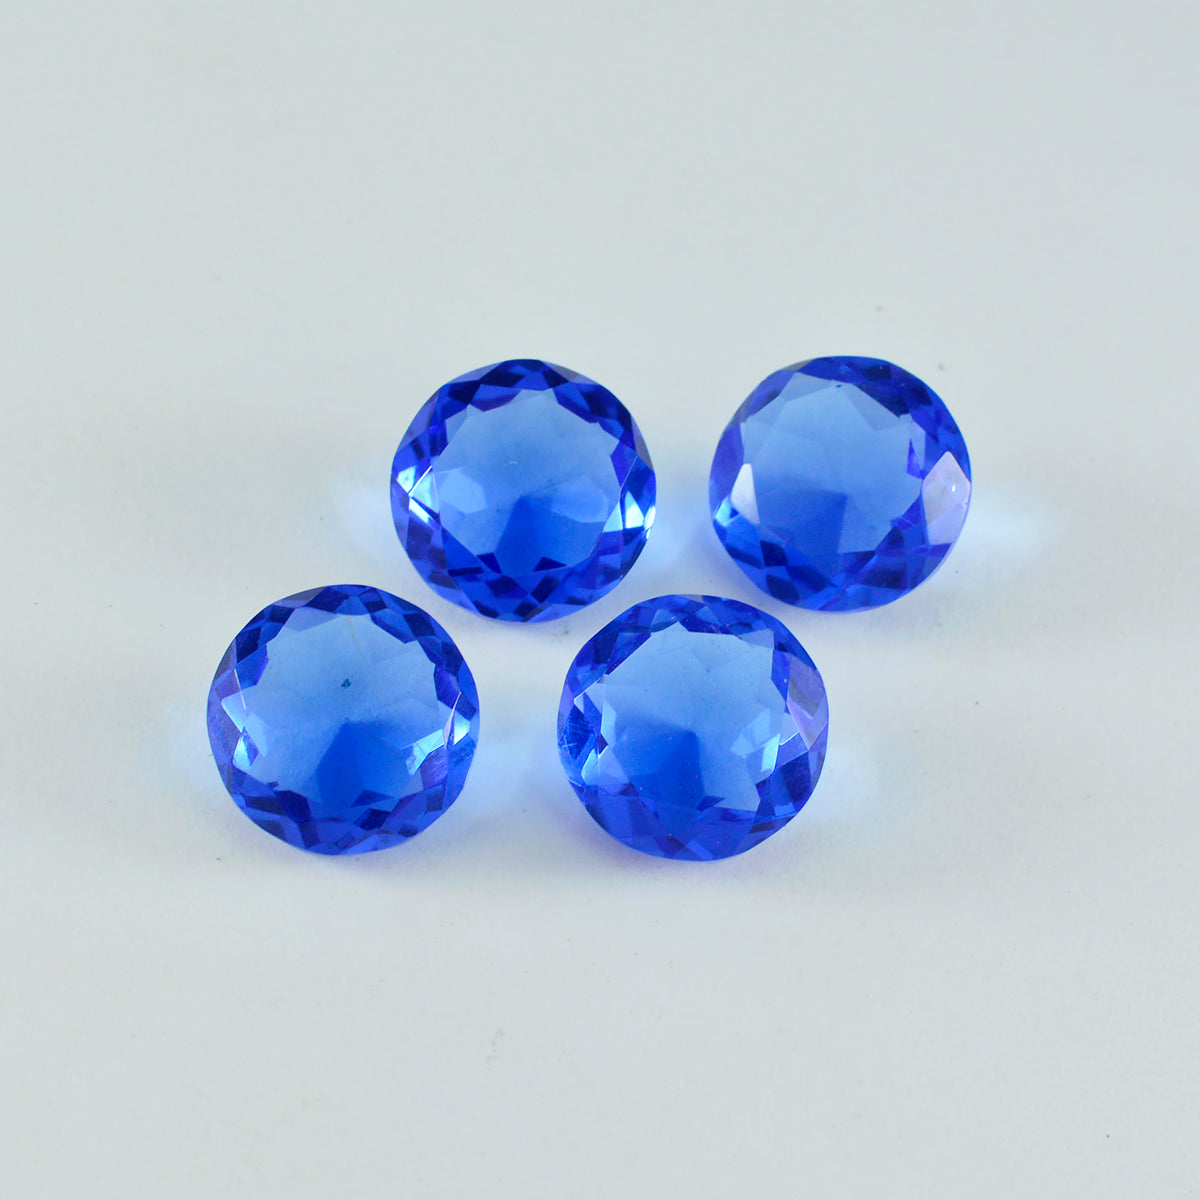 riyogems 1pc ブルー サファイア CZ ファセット 15x15 mm ラウンド形状 a+ 品質ルース宝石